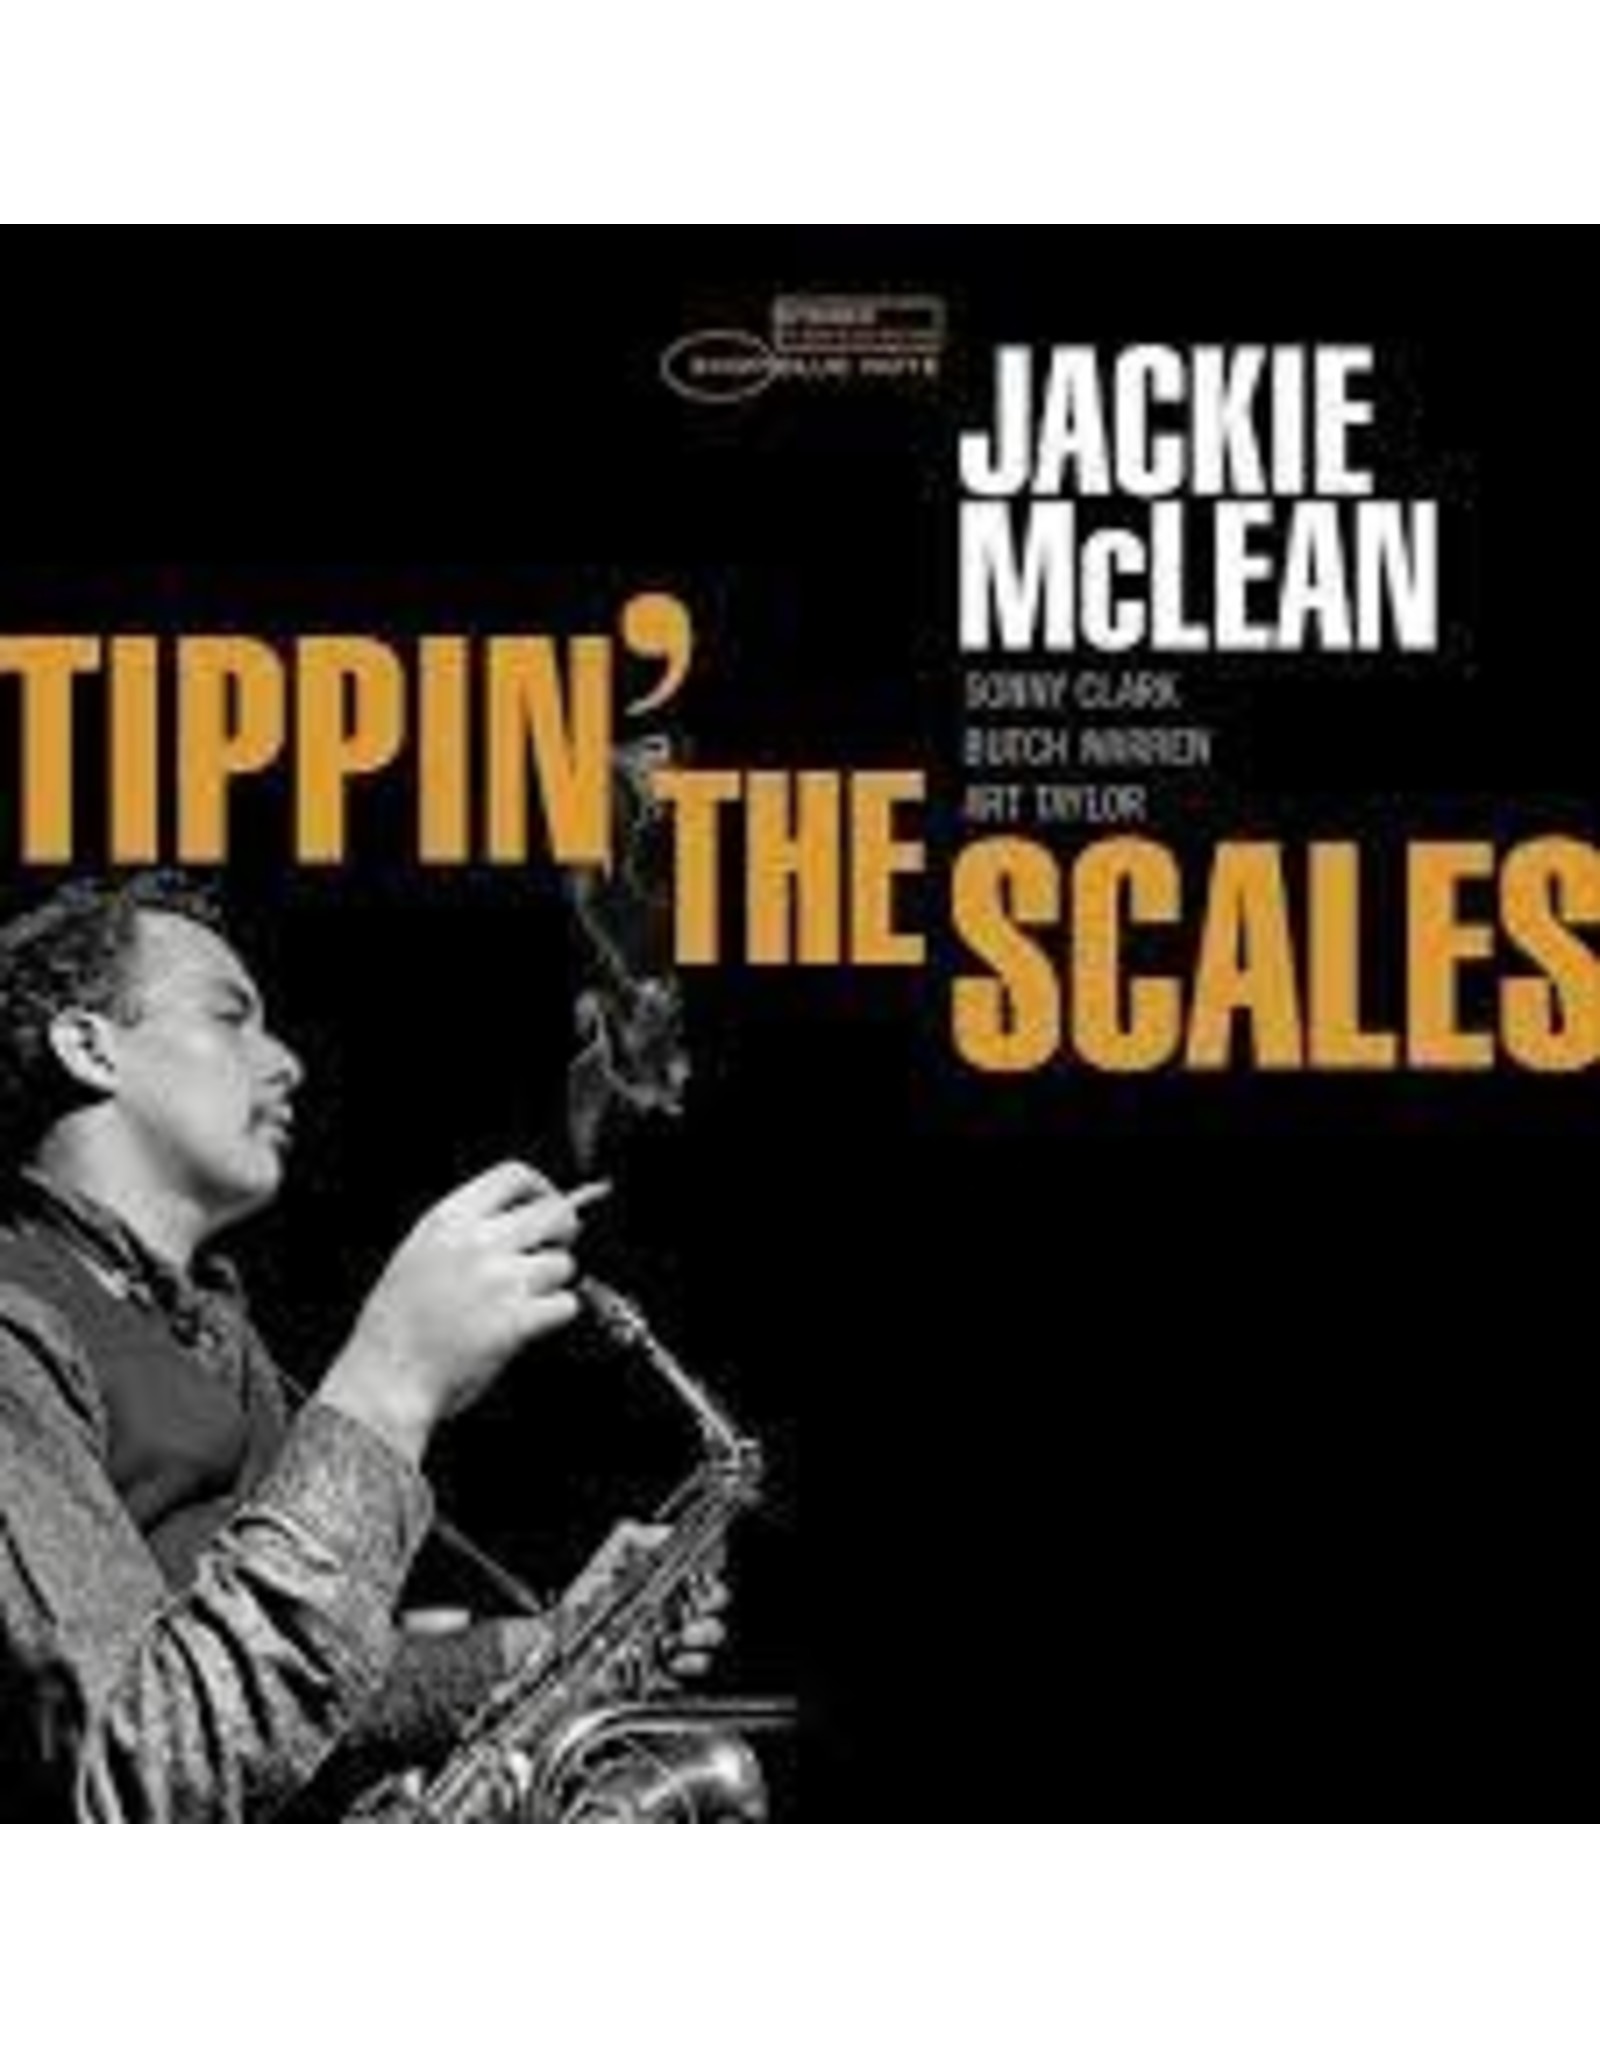 McLean, Jackie - Tippin' The Scales LP (Blue Note Tone Poet Series)